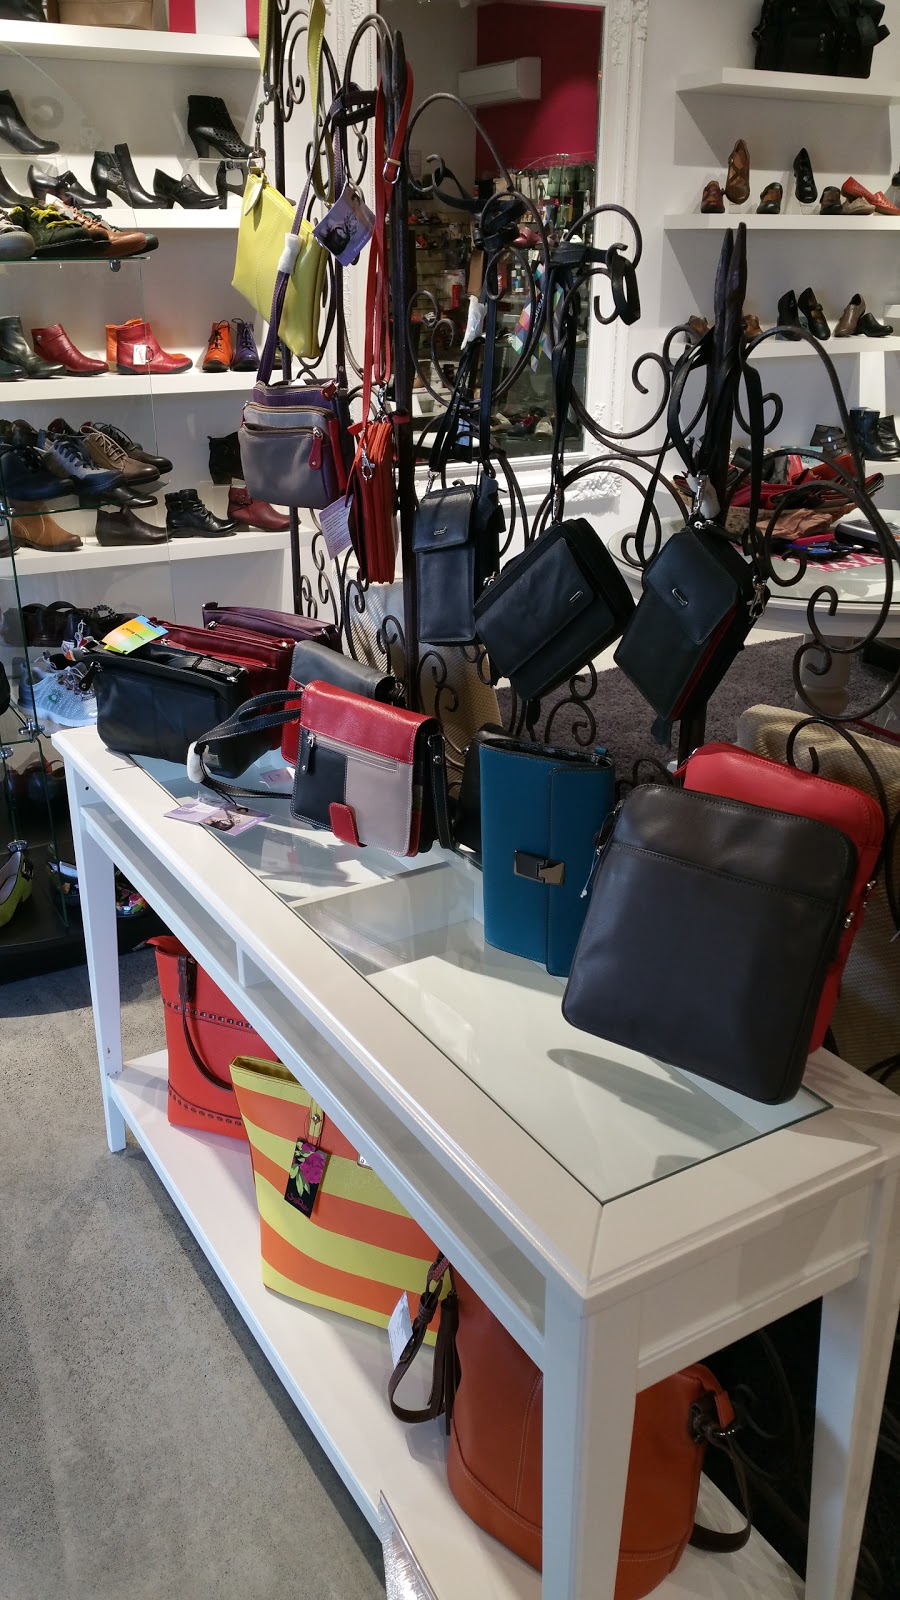 Berry Shoes & Accessories | Shop 2/58 Albert St, Berry NSW 2535, Australia | Phone: (02) 4464 2126